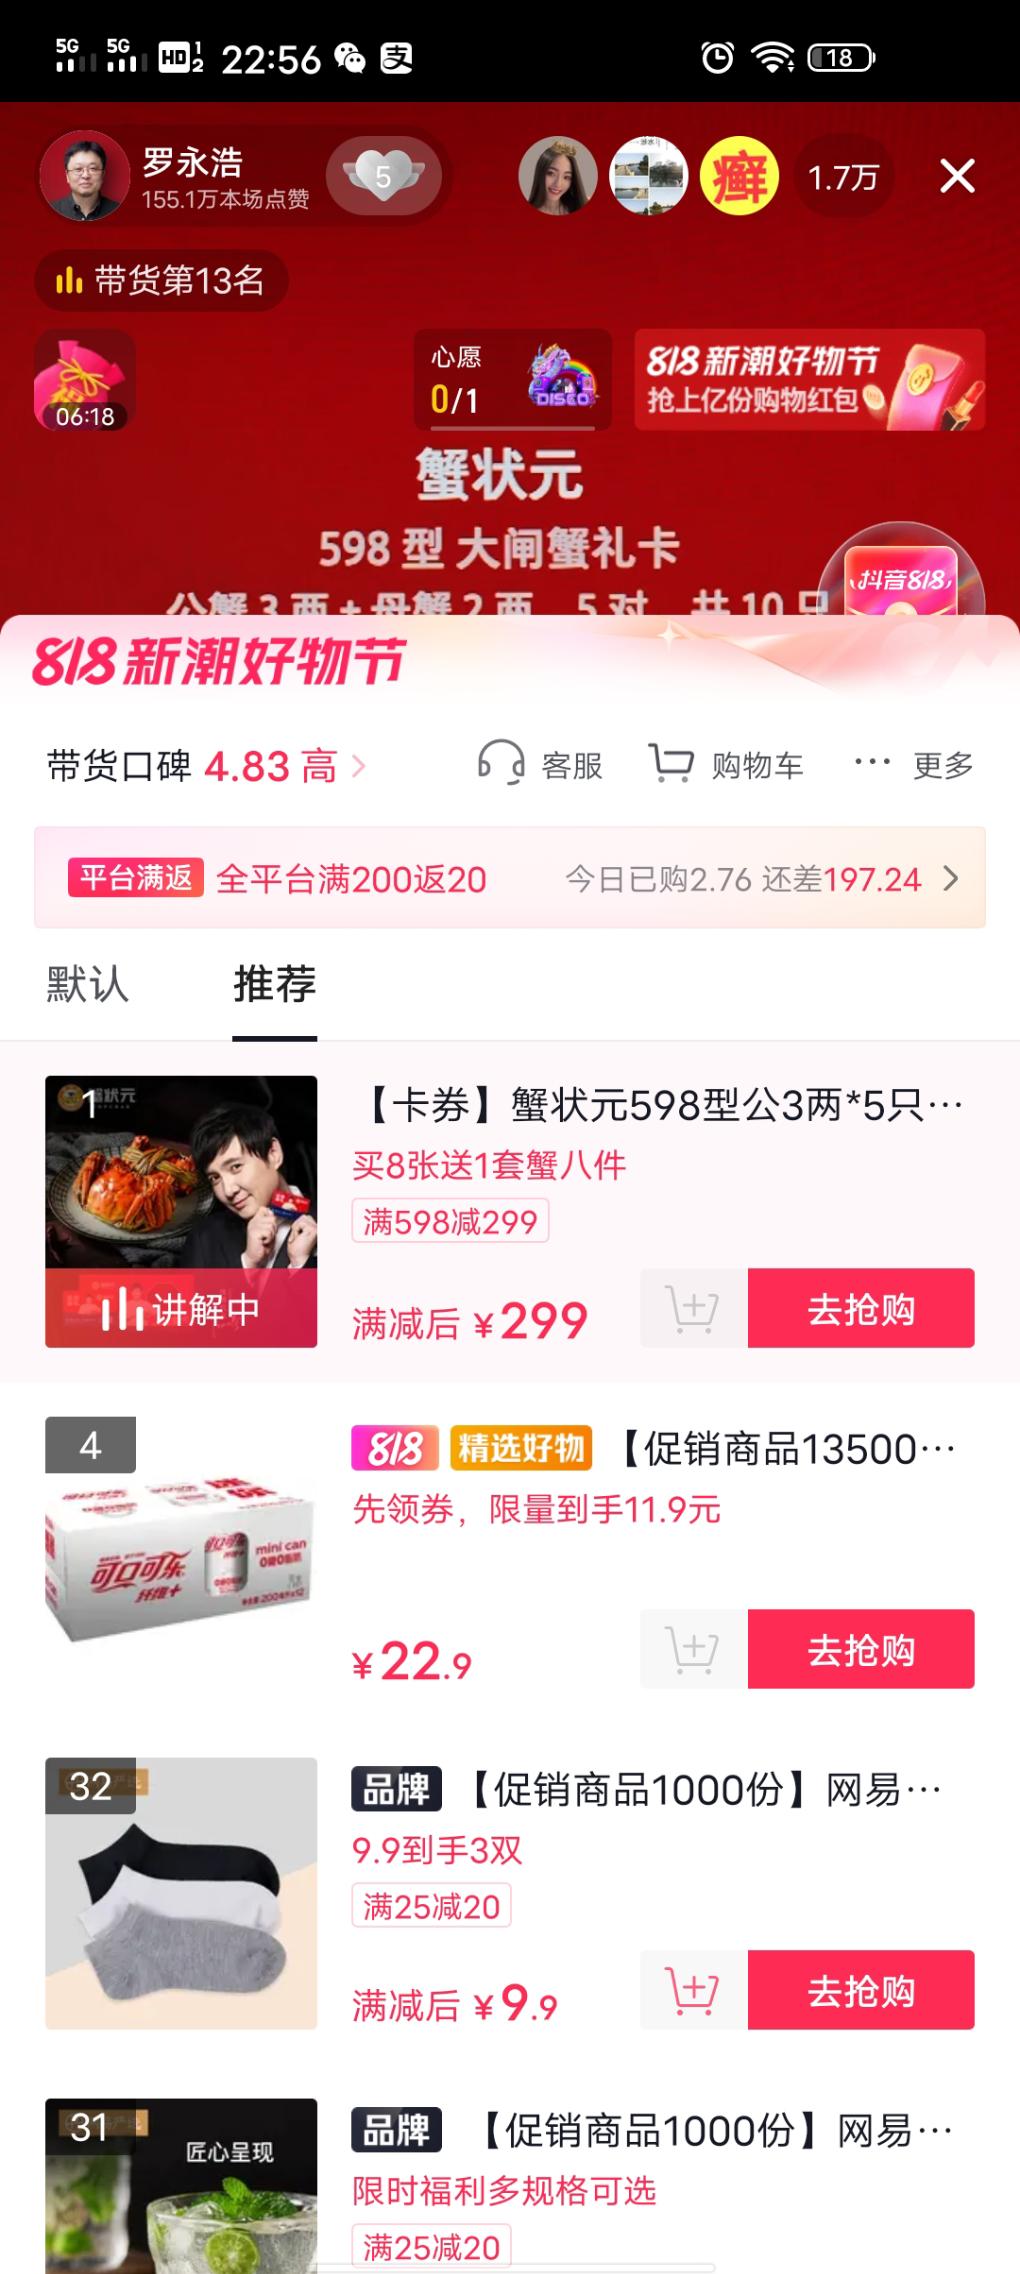 DY有9块多红包-添了2元多买了200mlX12罐肥皂水-罗永浩直播间-惠小助(52huixz.com)